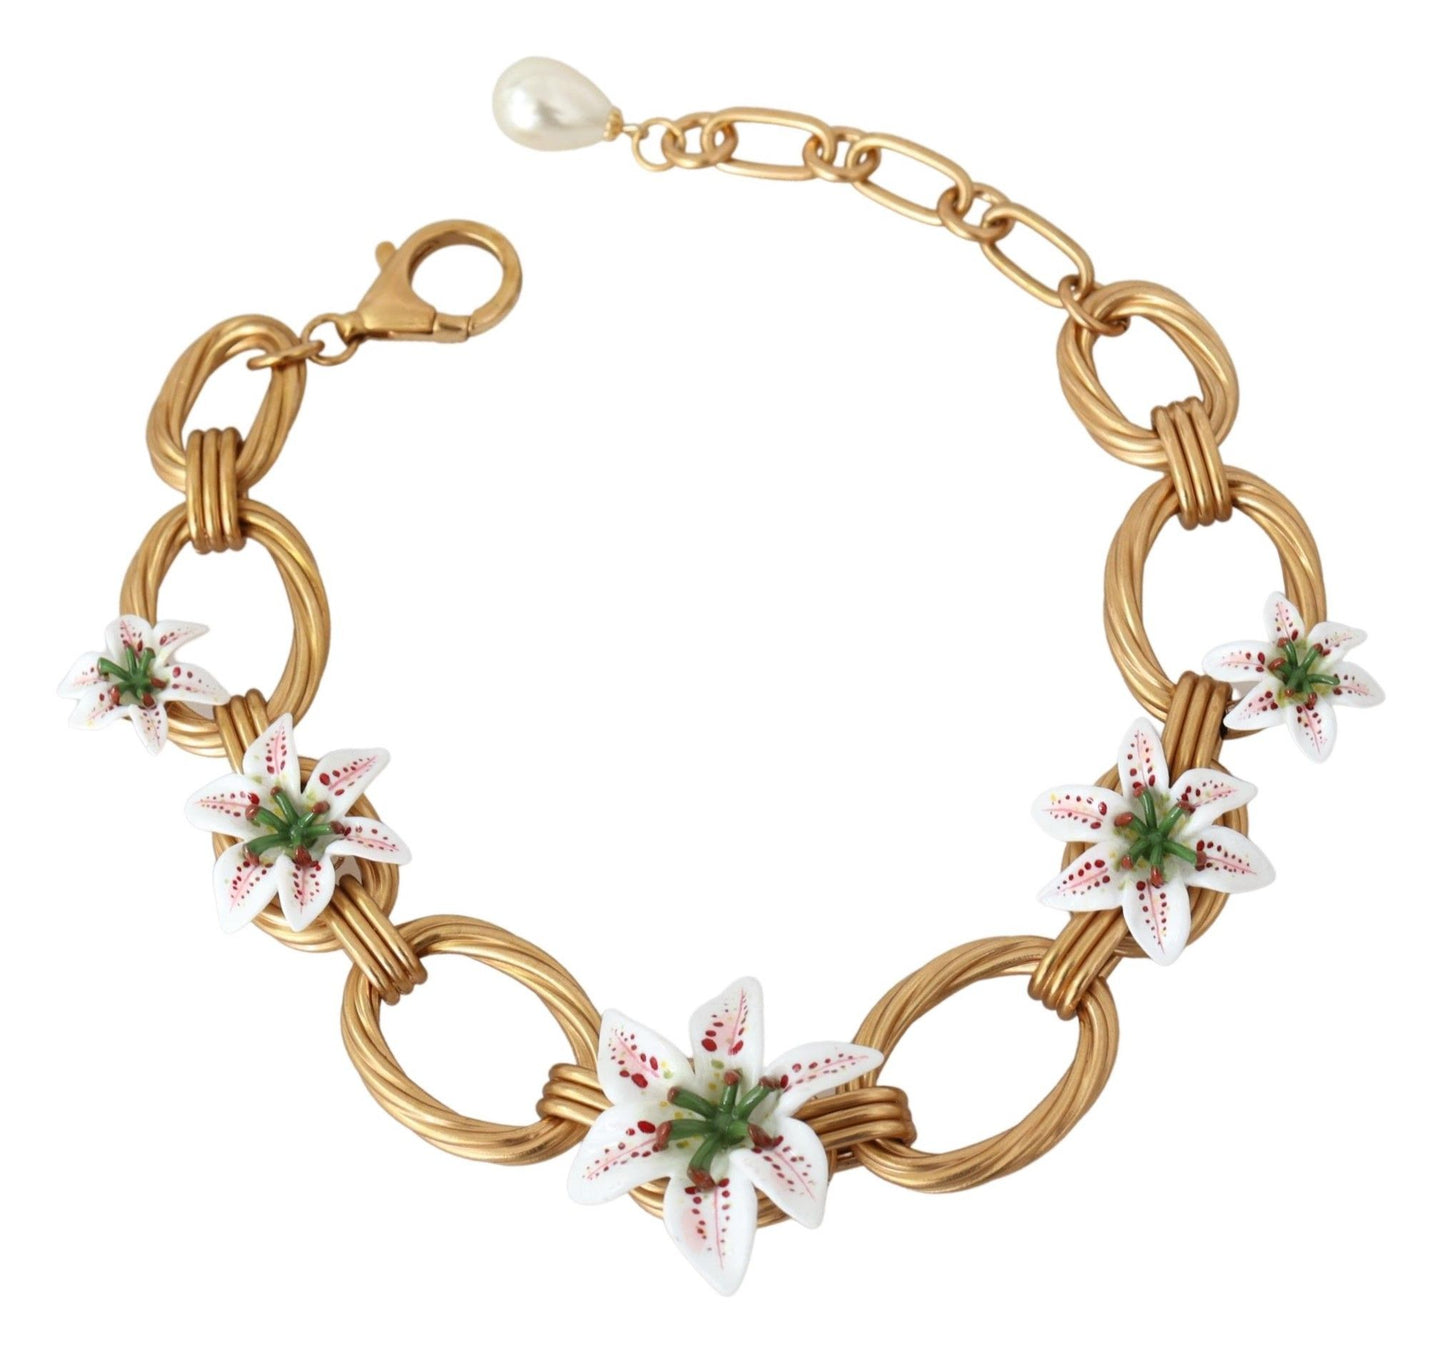 Exquisite Gold Lilium Floral Statement Necklace